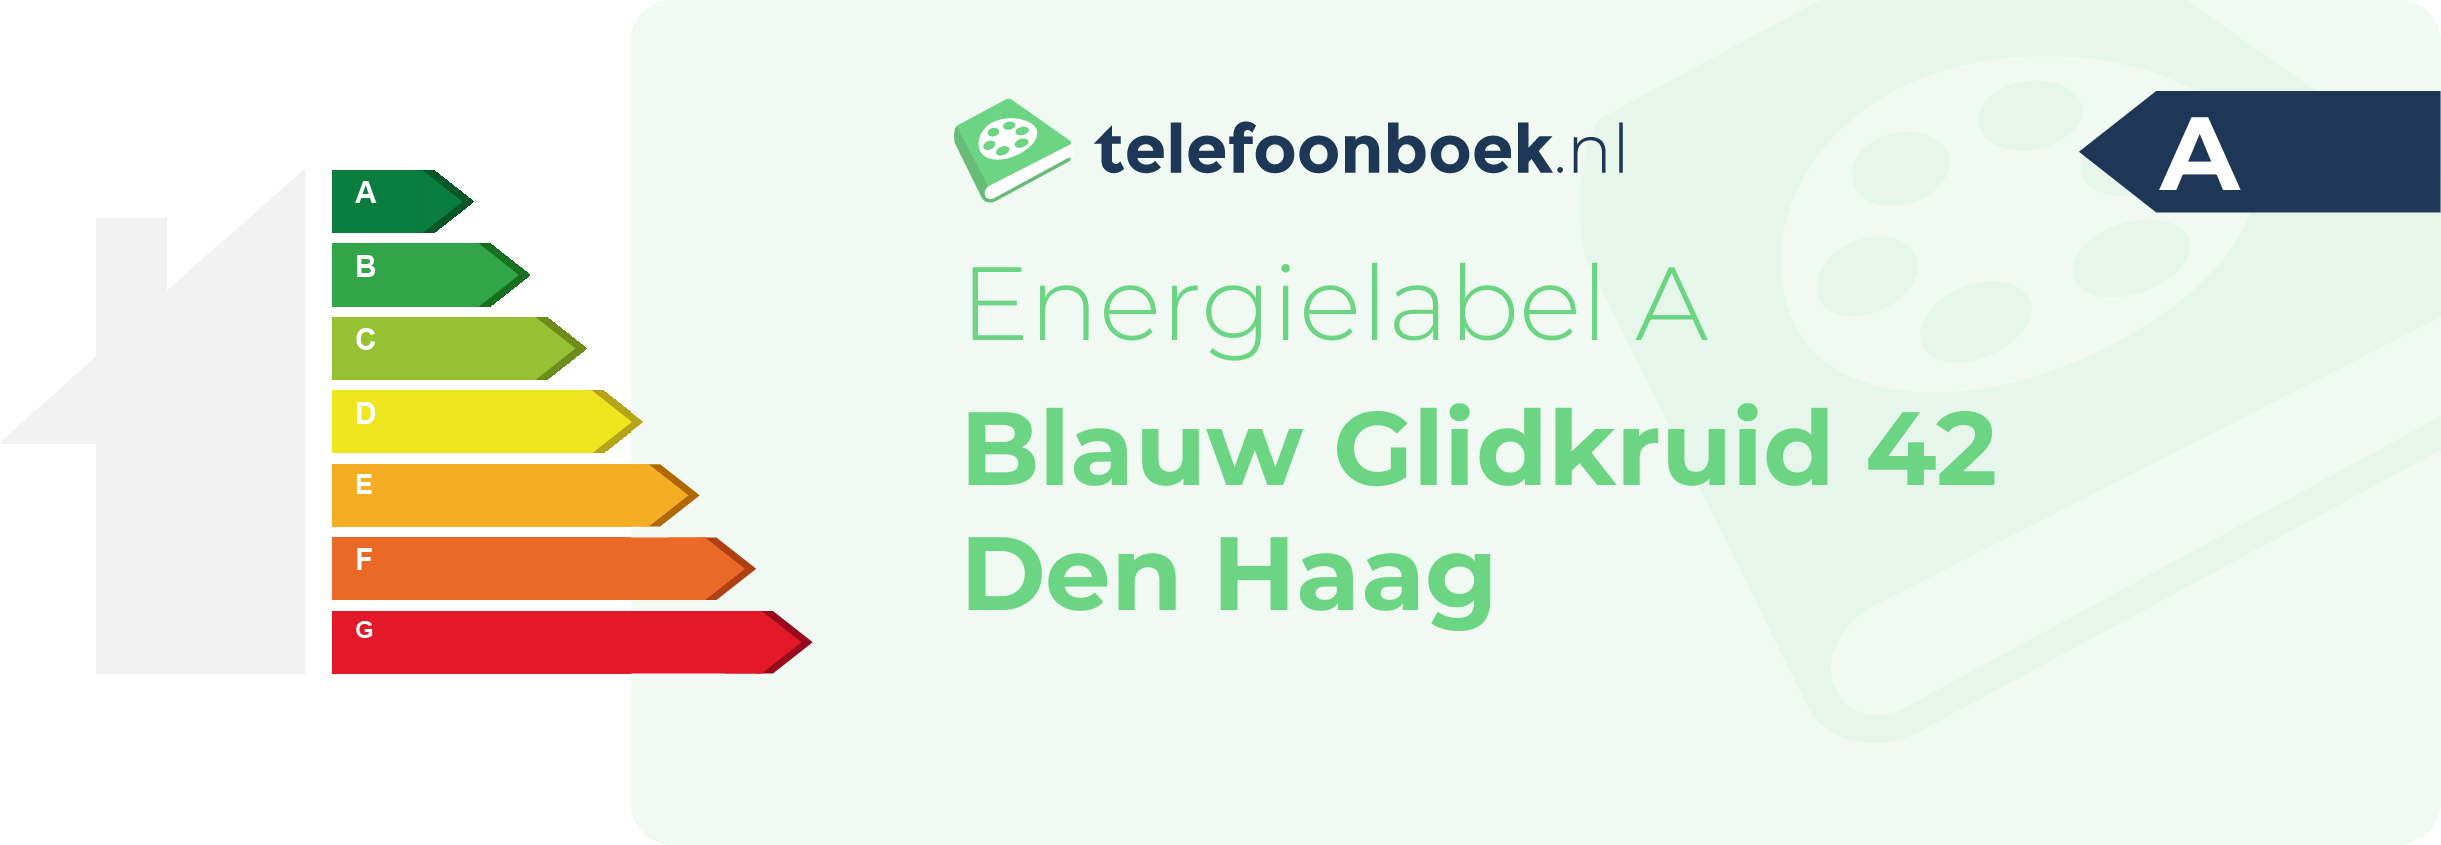 Energielabel Blauw Glidkruid 42 Den Haag